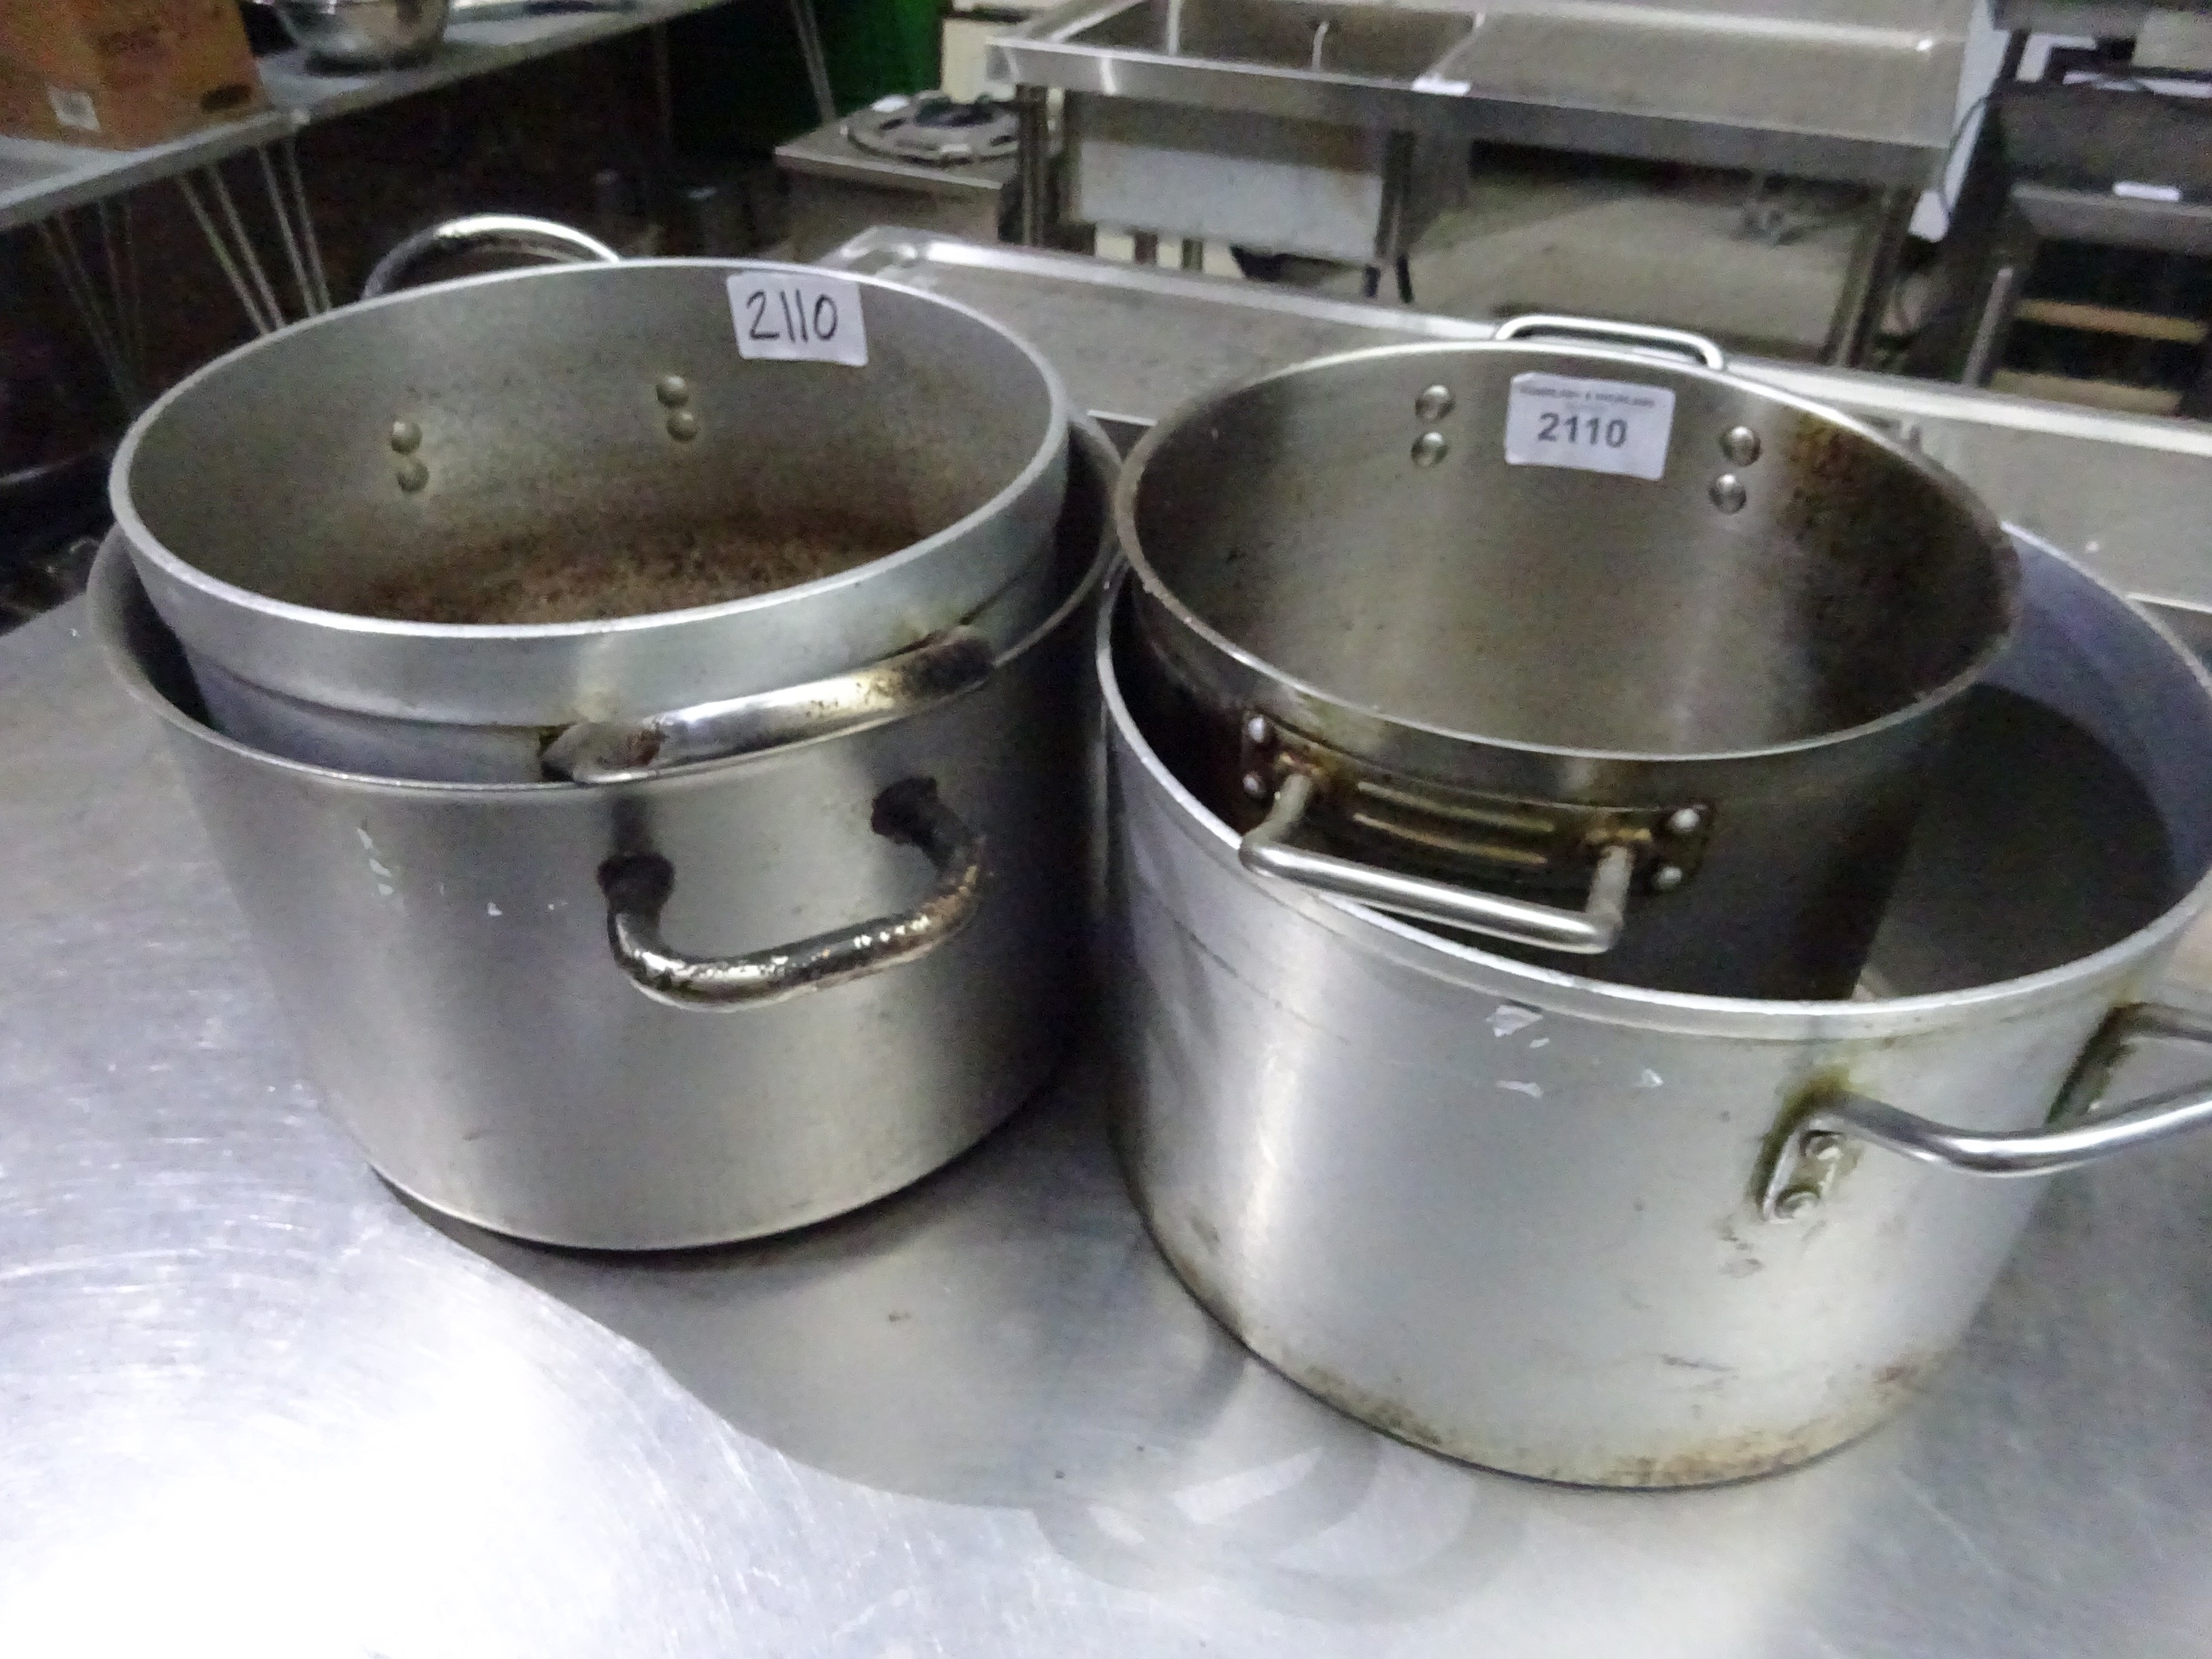 4 large cooking pots.